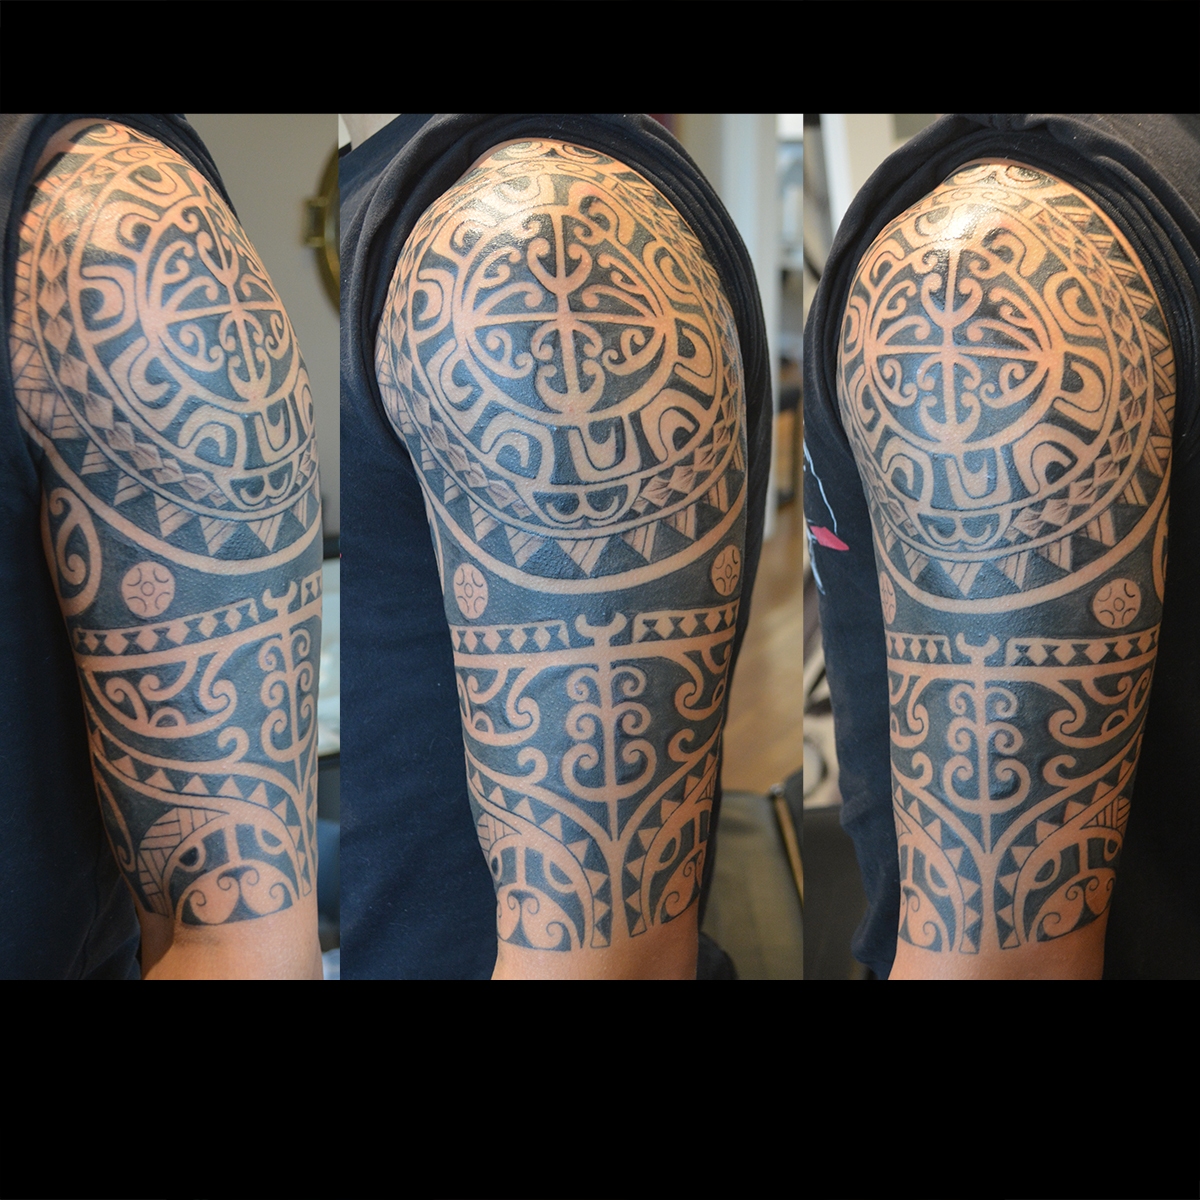 Samoan Warrior Half Sleeve Tattoo by thehoundofulster on DeviantArt